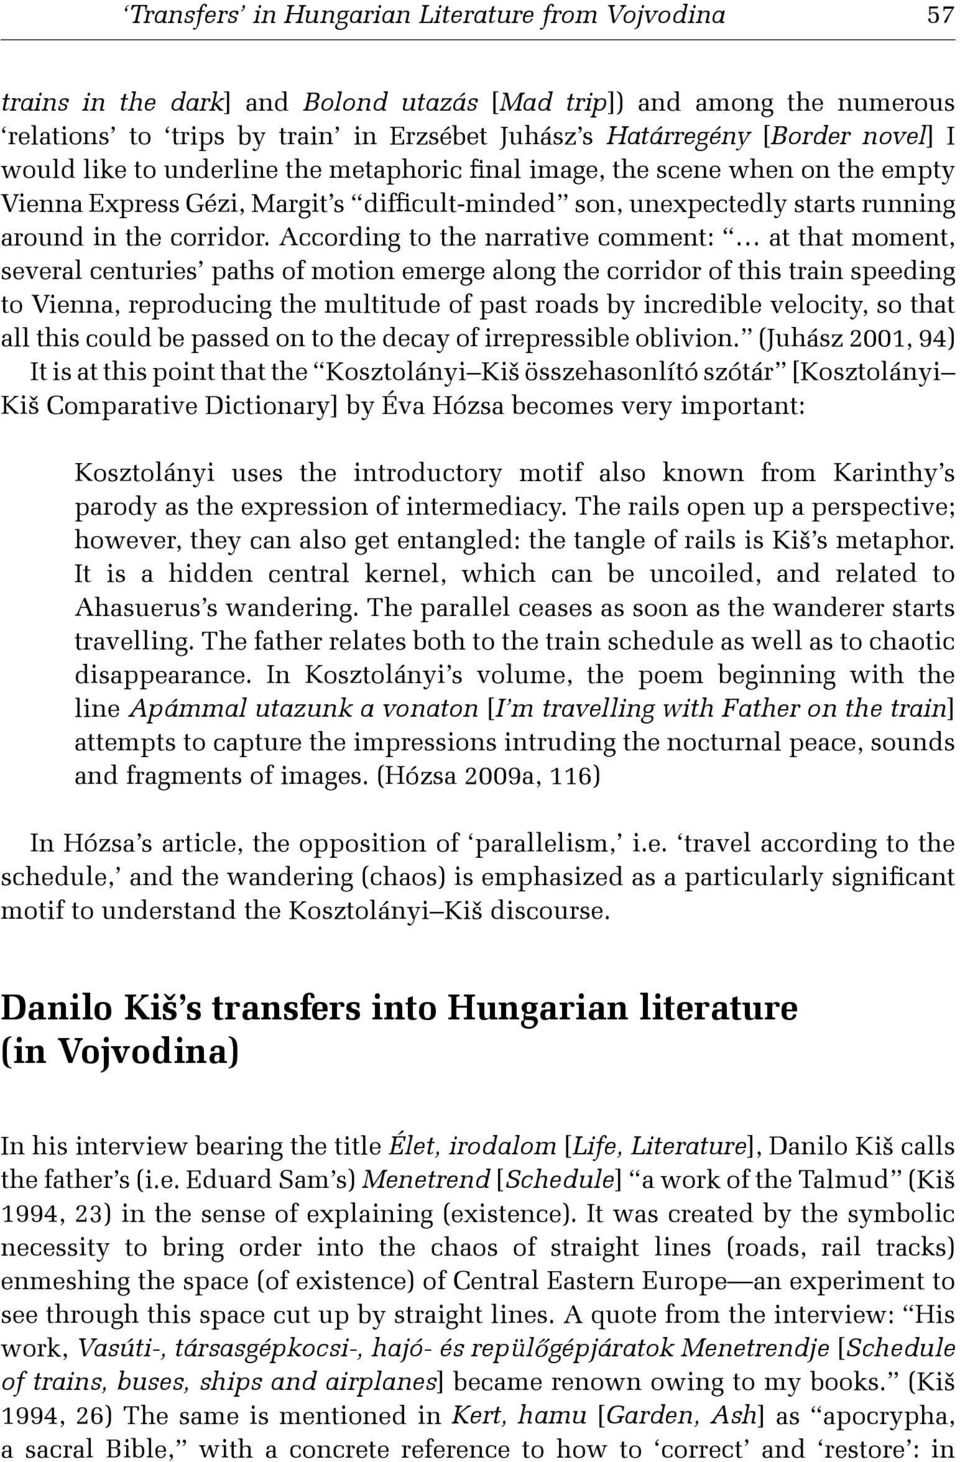 Danilo Kiš s transfers into Hungarian literature (in Vojvodina)!w Élet, irodalom [Life, Literature]n / I* a.. 6 Menetrend [Schedule] s w 2 ai* &''(n $7 i ai. w a n a i K e i. 8!